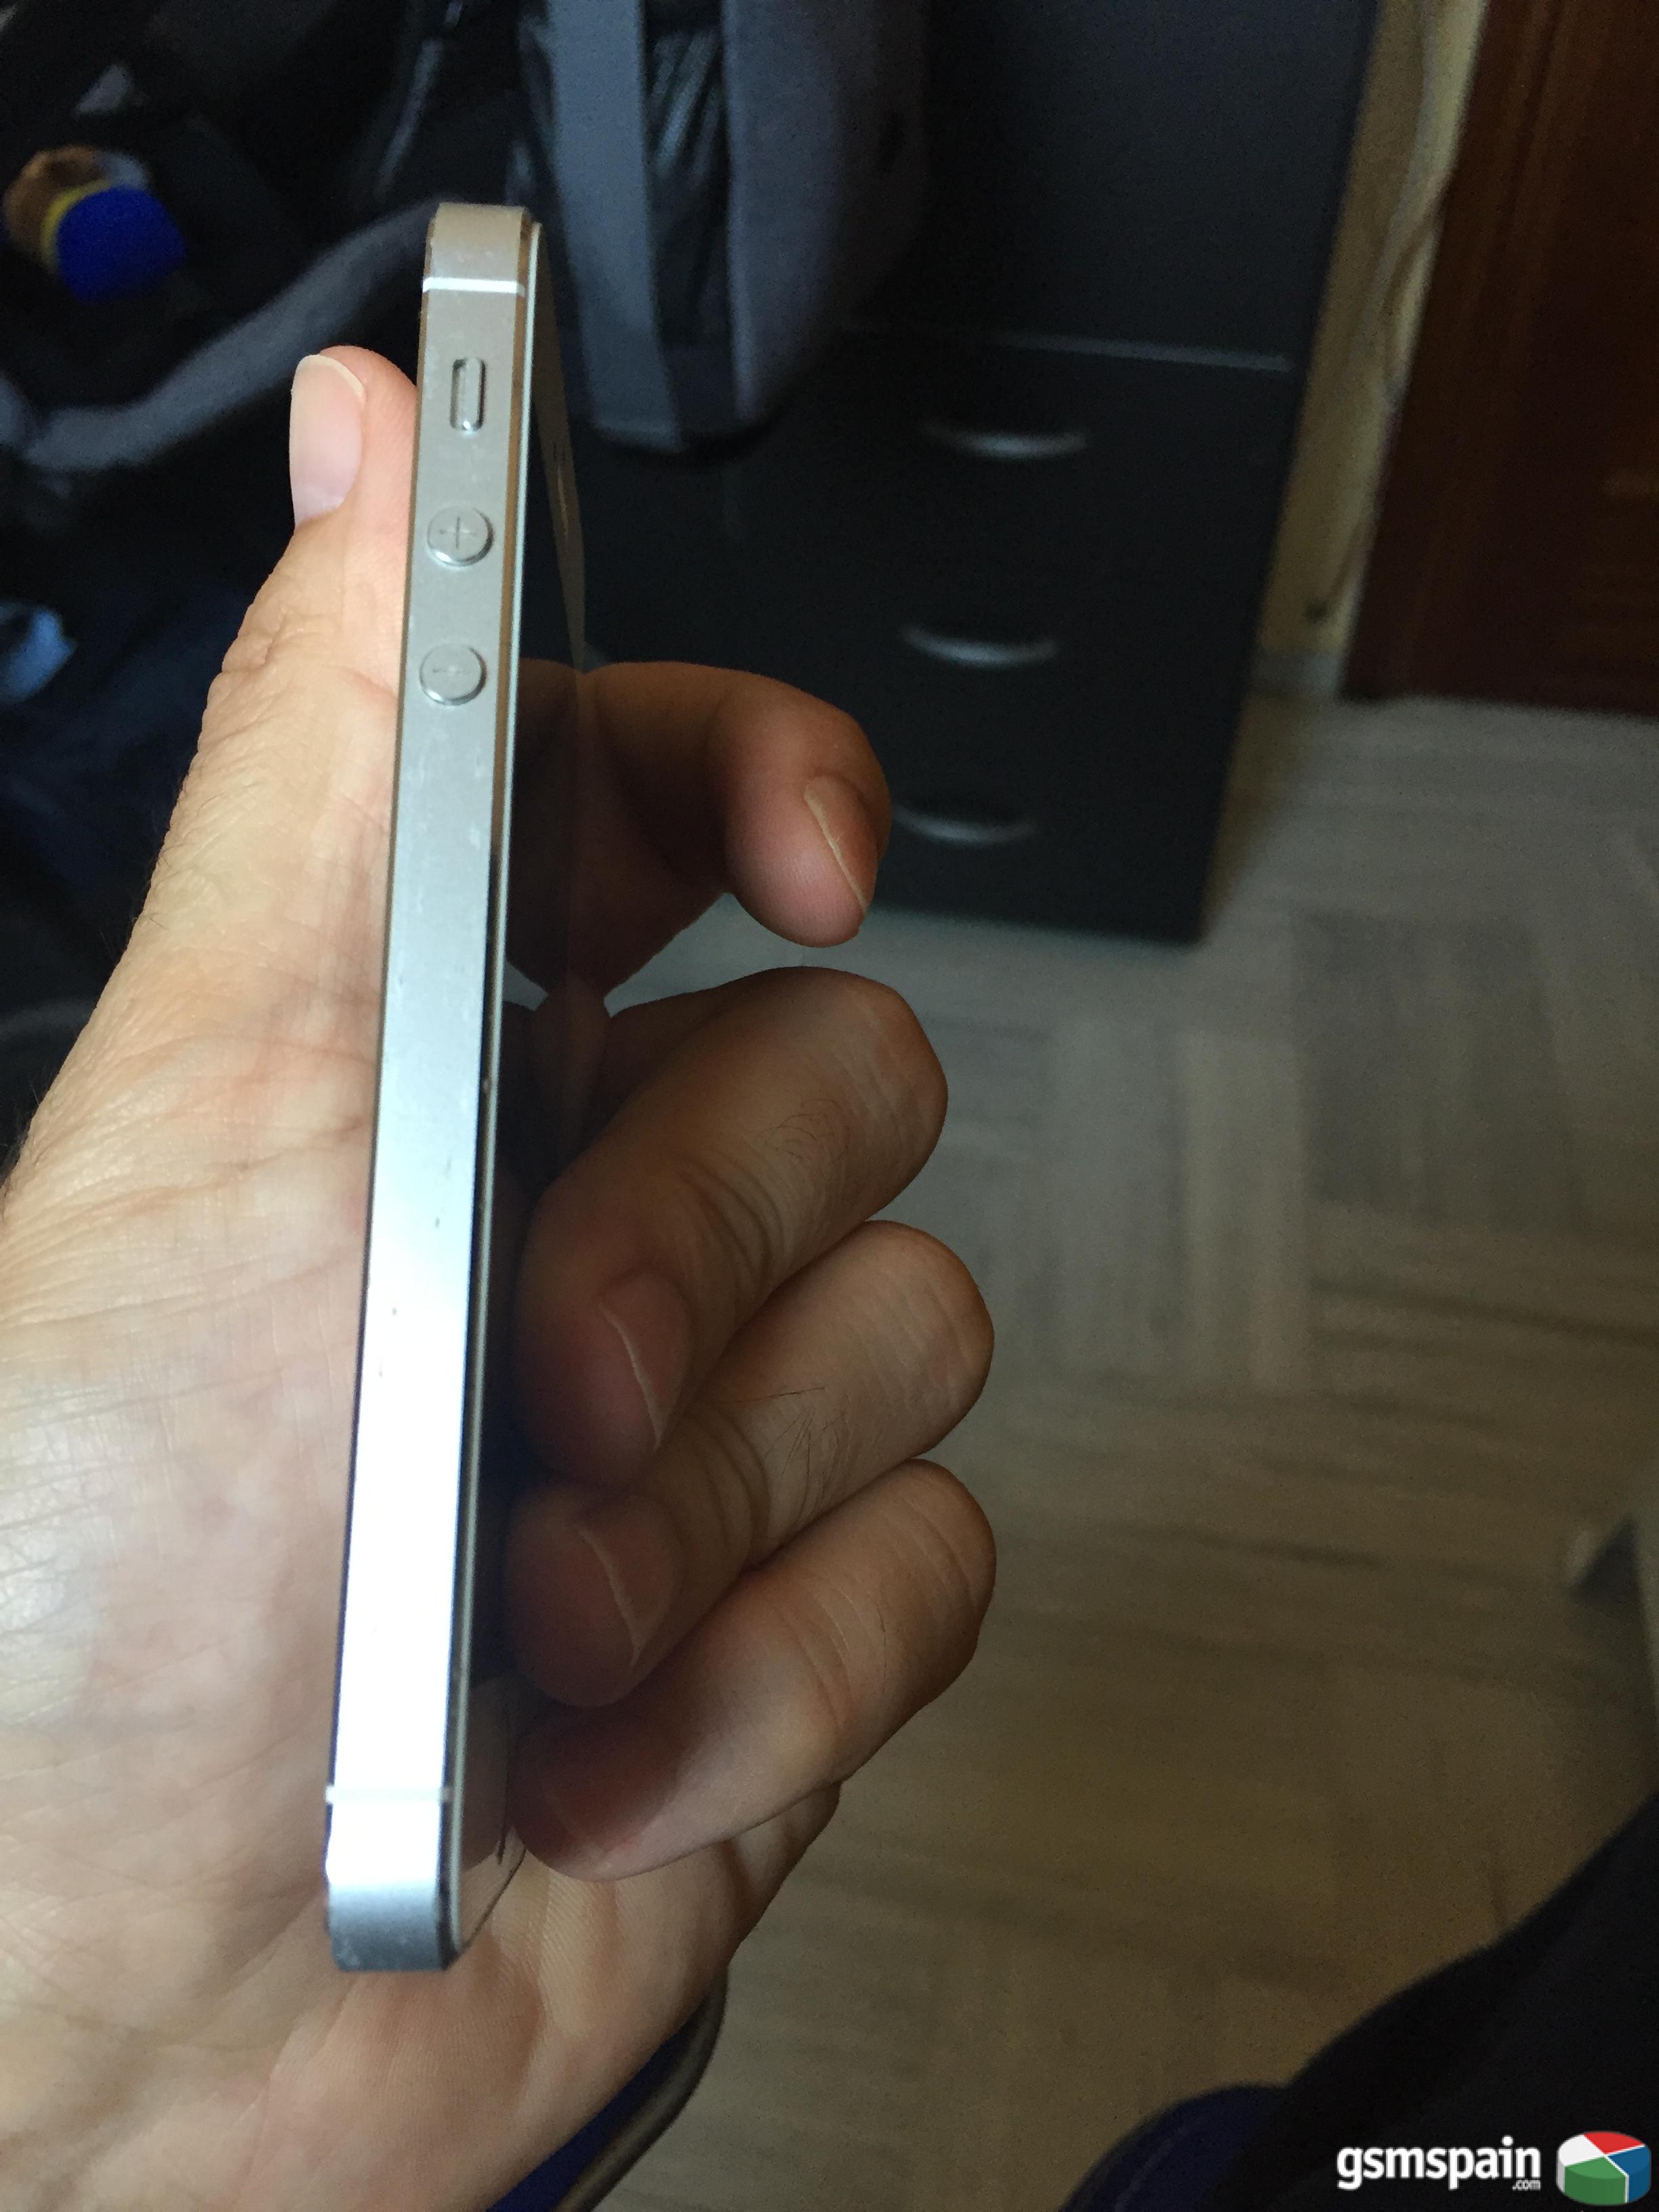 [VENDO] Iphone 5s 16gb para arreglar